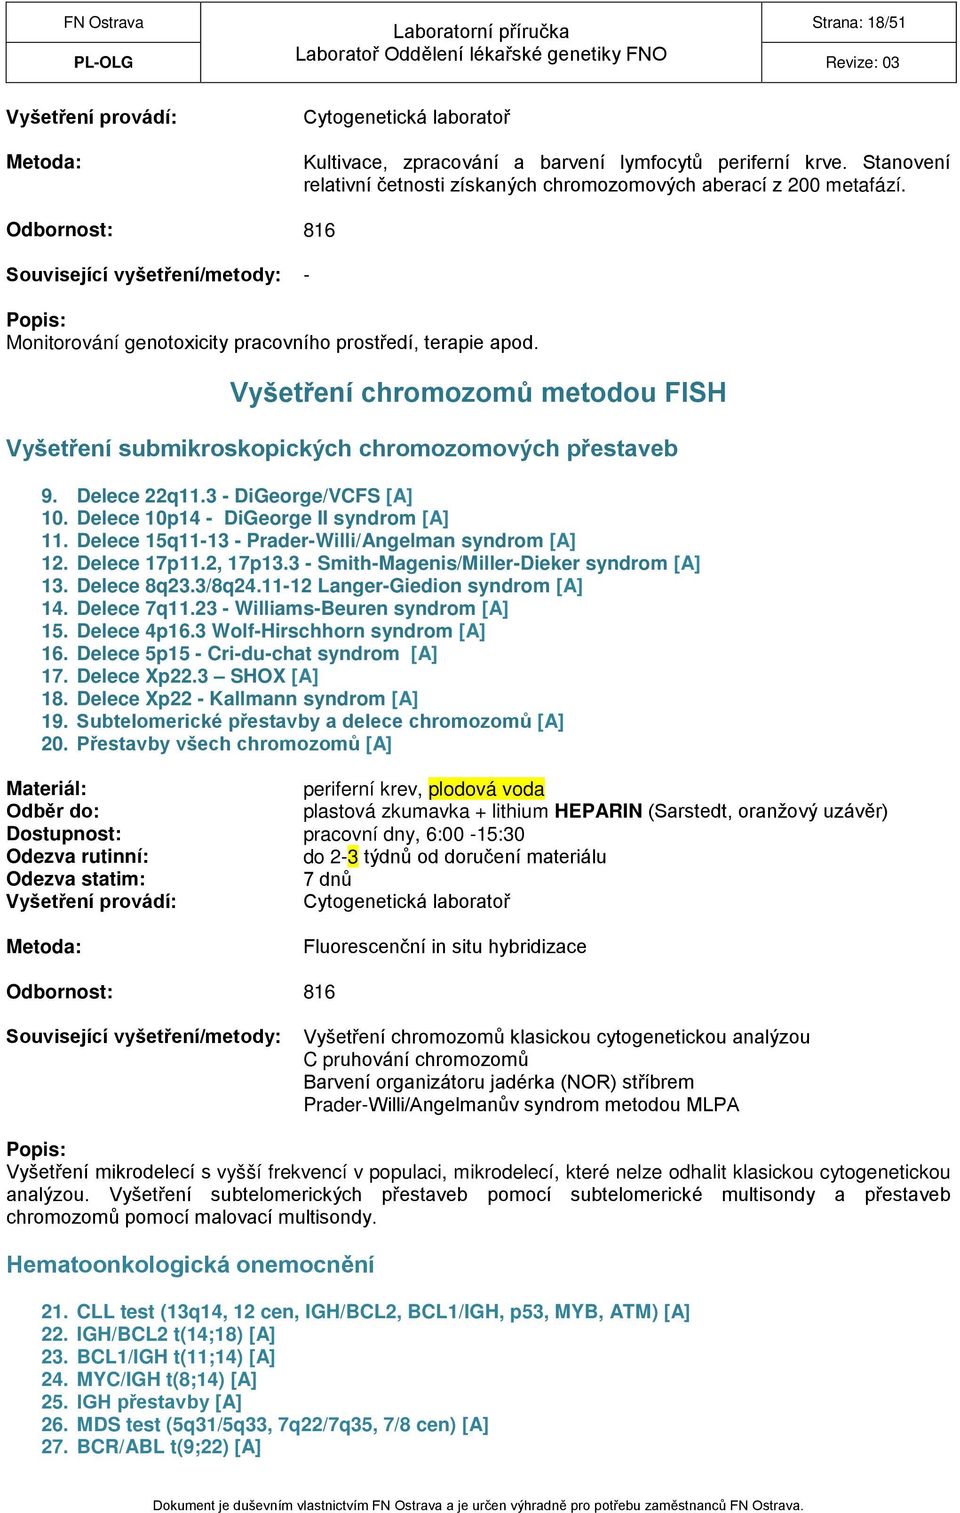 Delece 22q11.3 - DiGeorge/VCFS [A] 10. Delece 10p14 - DiGeorge II syndrom [A] 11. Delece 15q11-13 - Prader-Willi/Angelman syndrom [A] 12. Delece 17p11.2, 17p13.